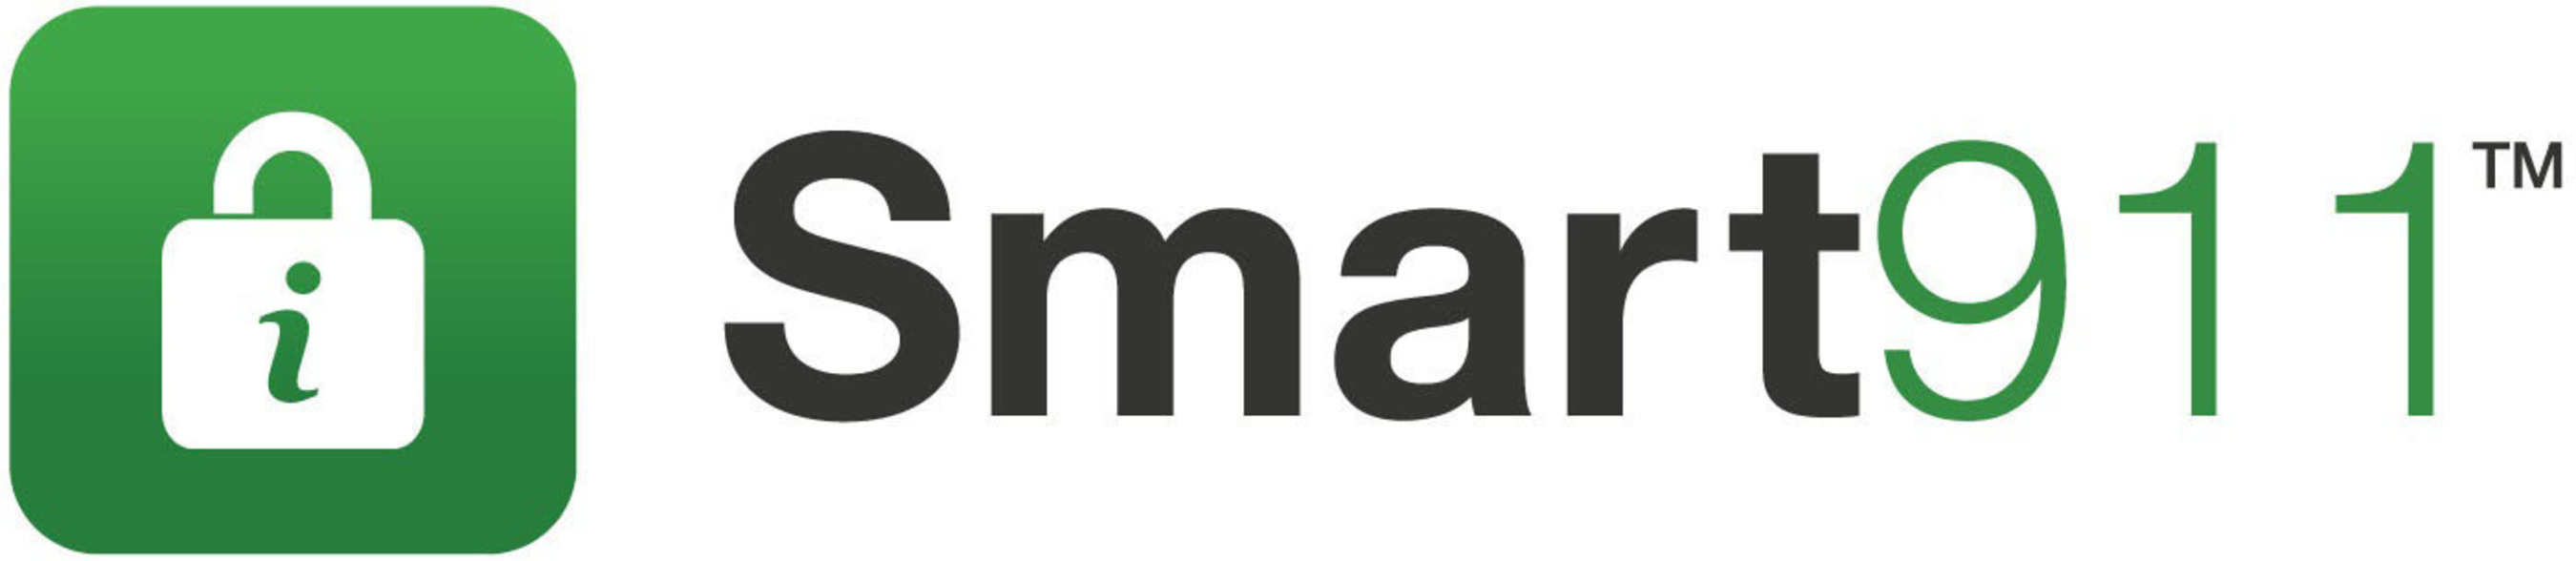 Smart911 Logo.